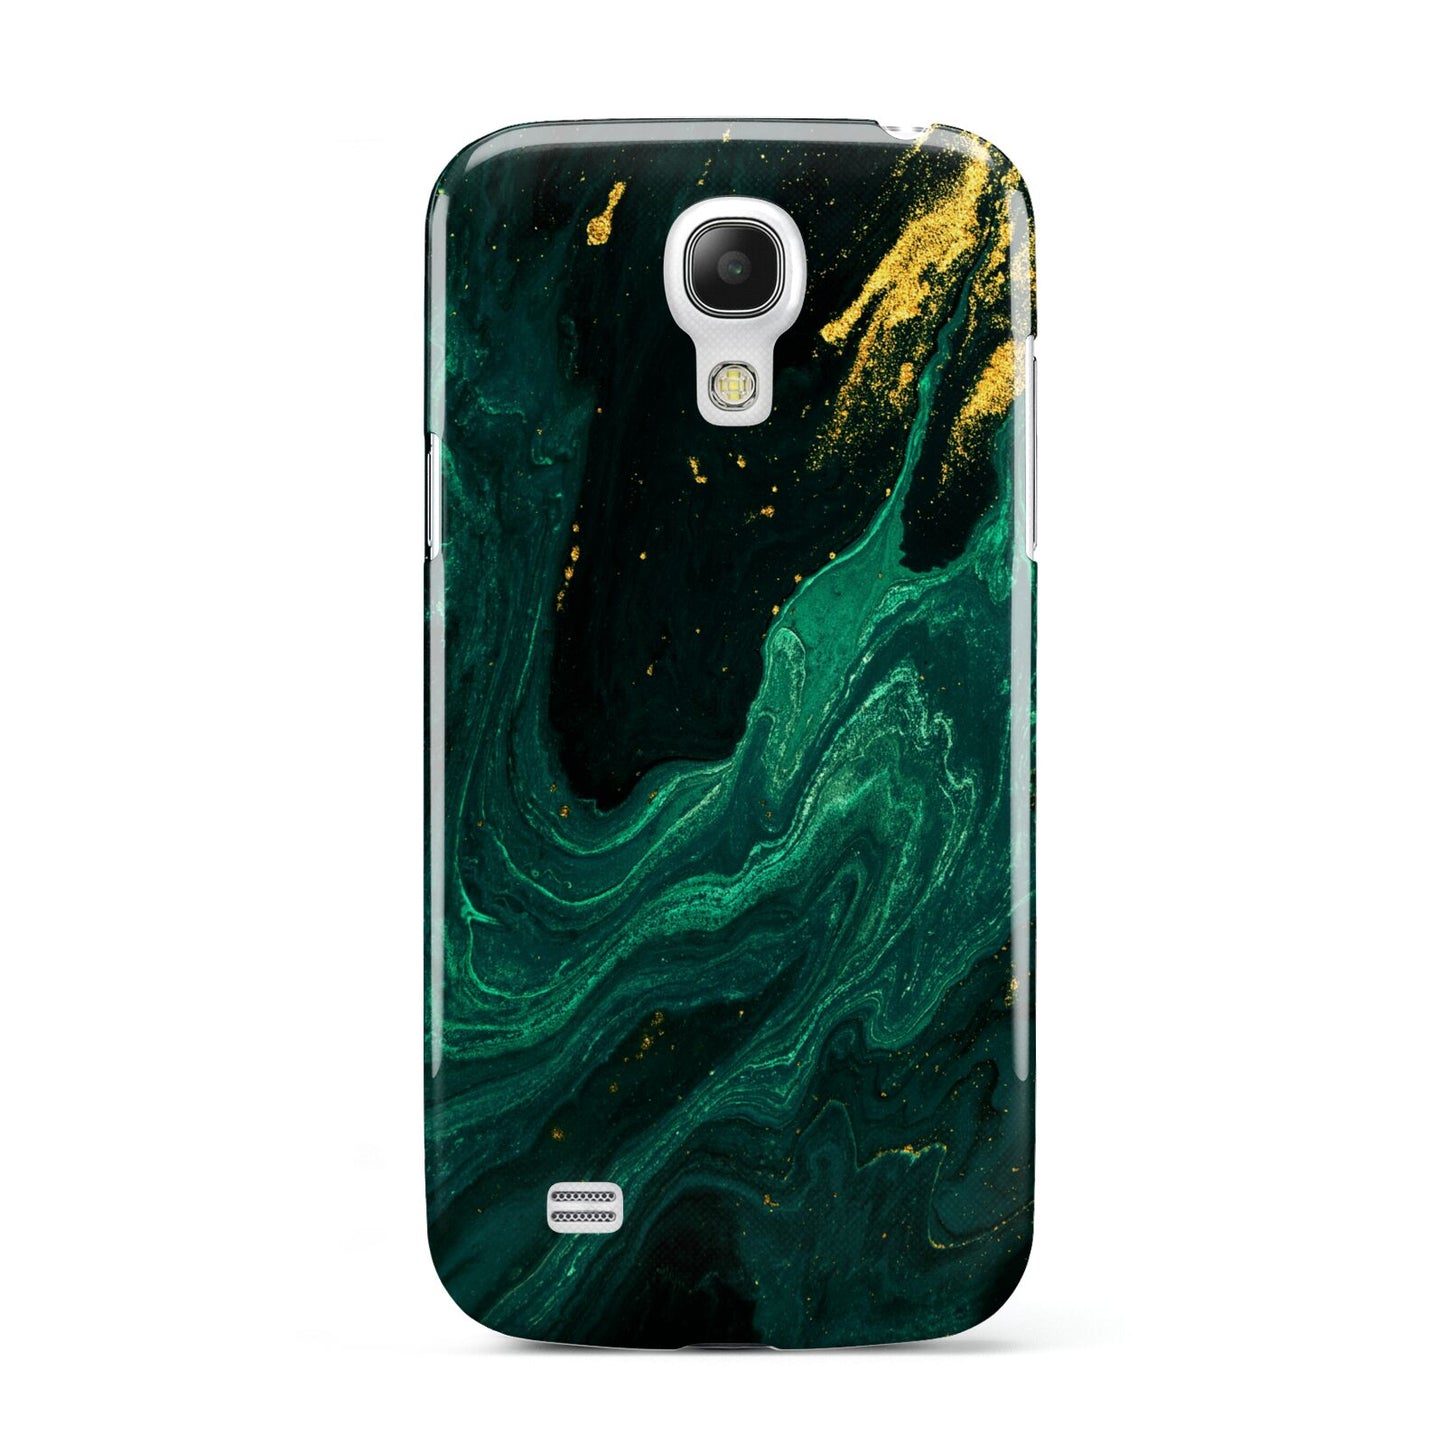 Emerald Green Samsung Galaxy S4 Mini Case